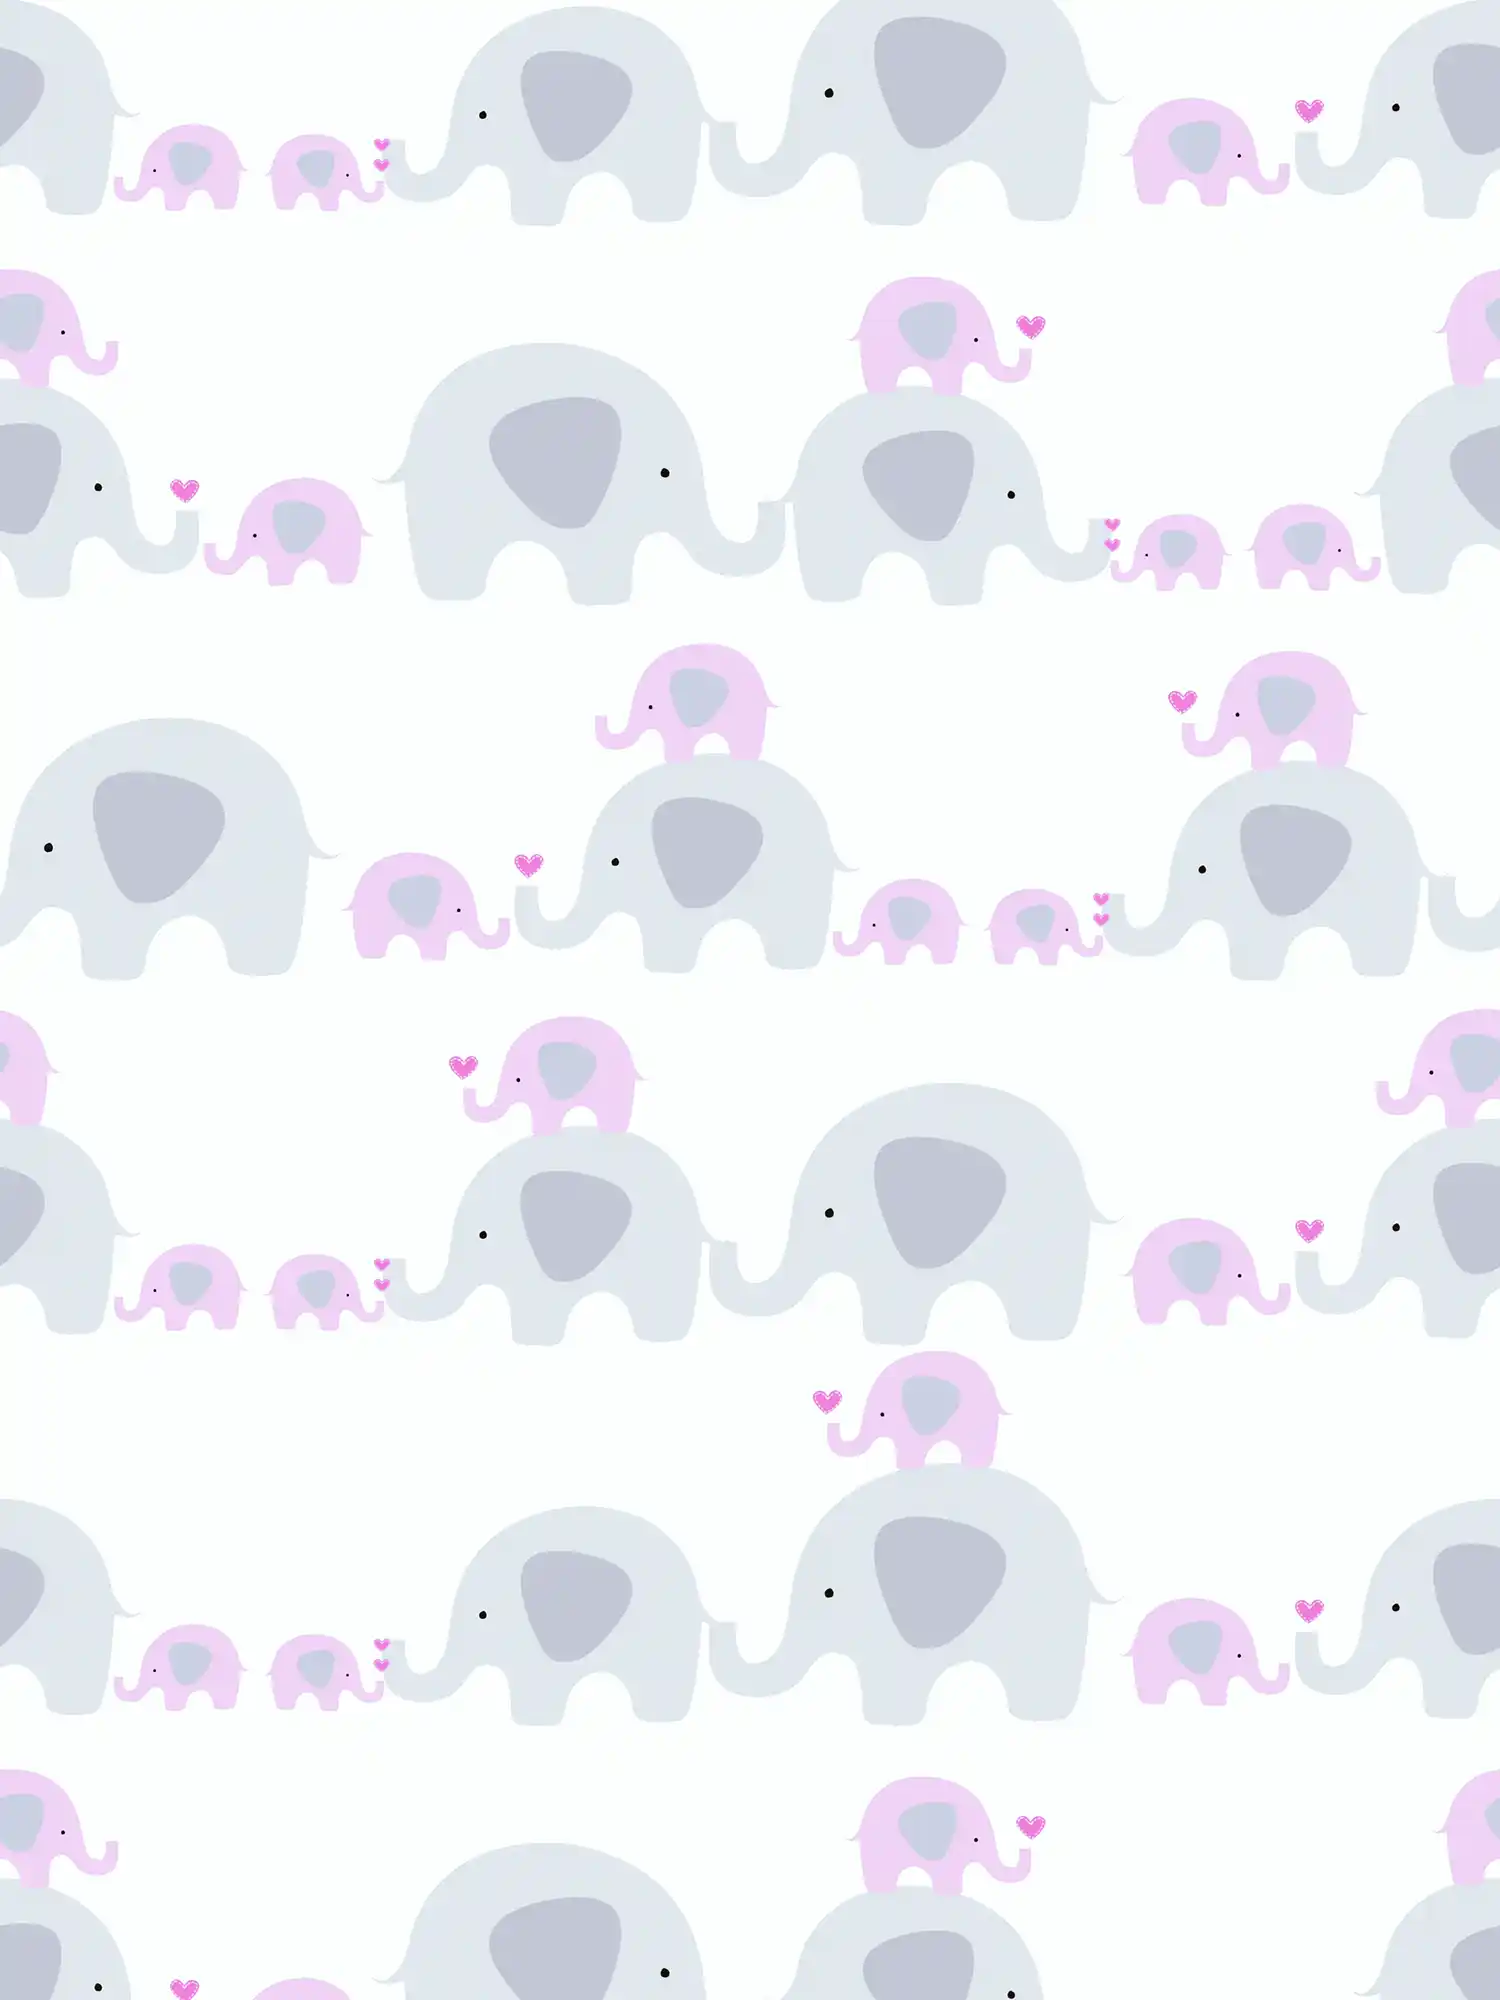 Wallpaper girls room elephant pattern - pink, grey , white
